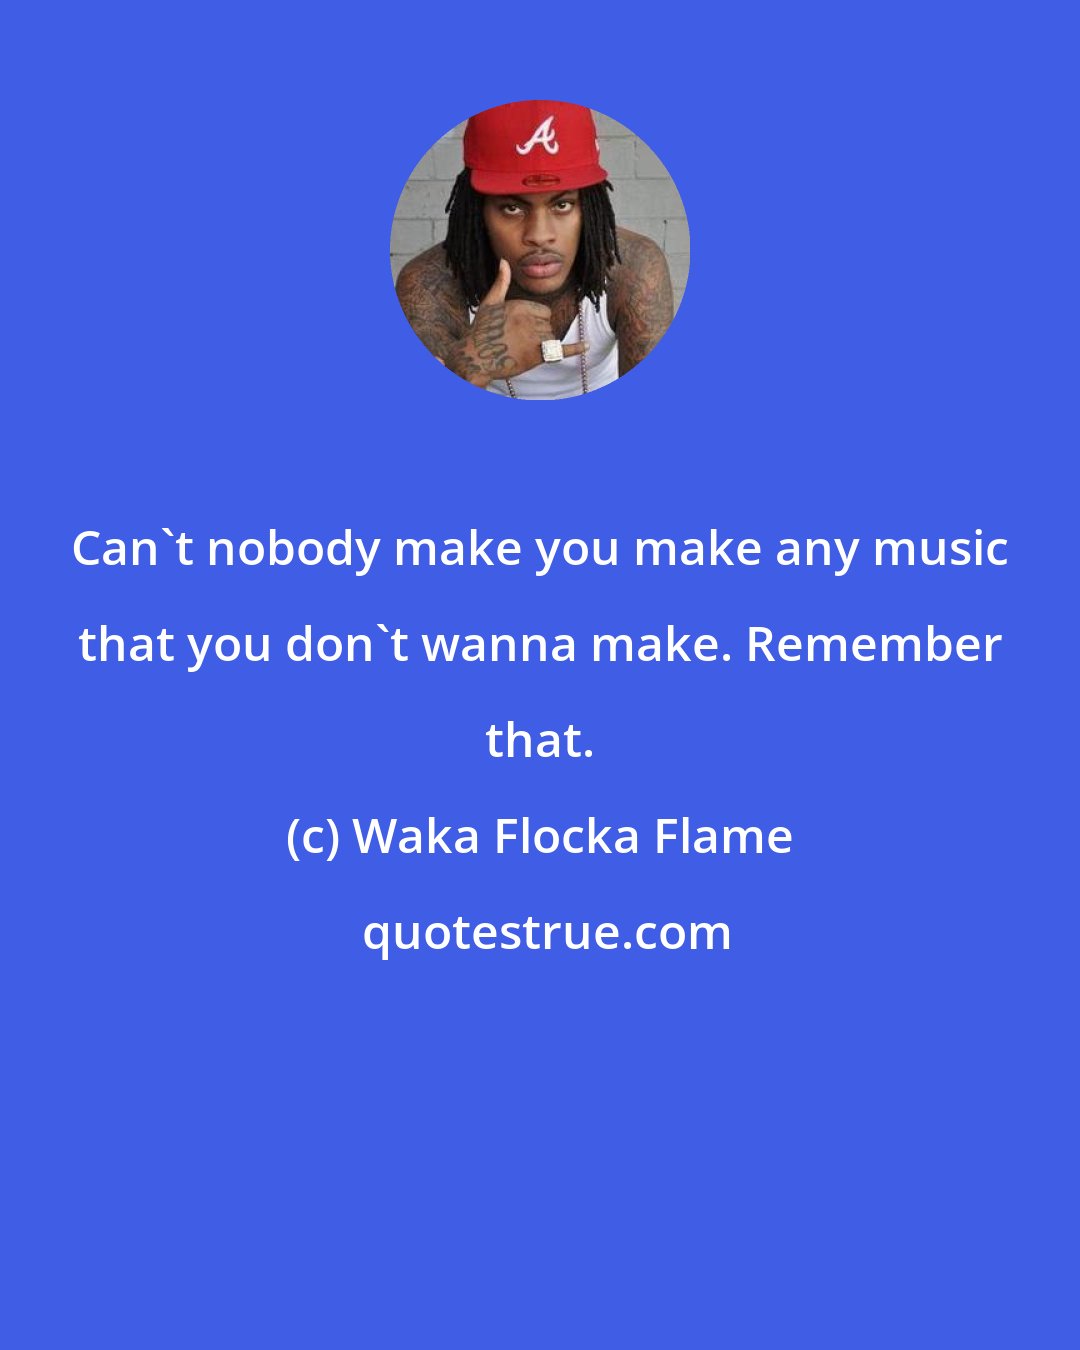 Waka Flocka Flame: Can't nobody make you make any music that you don't wanna make. Remember that.